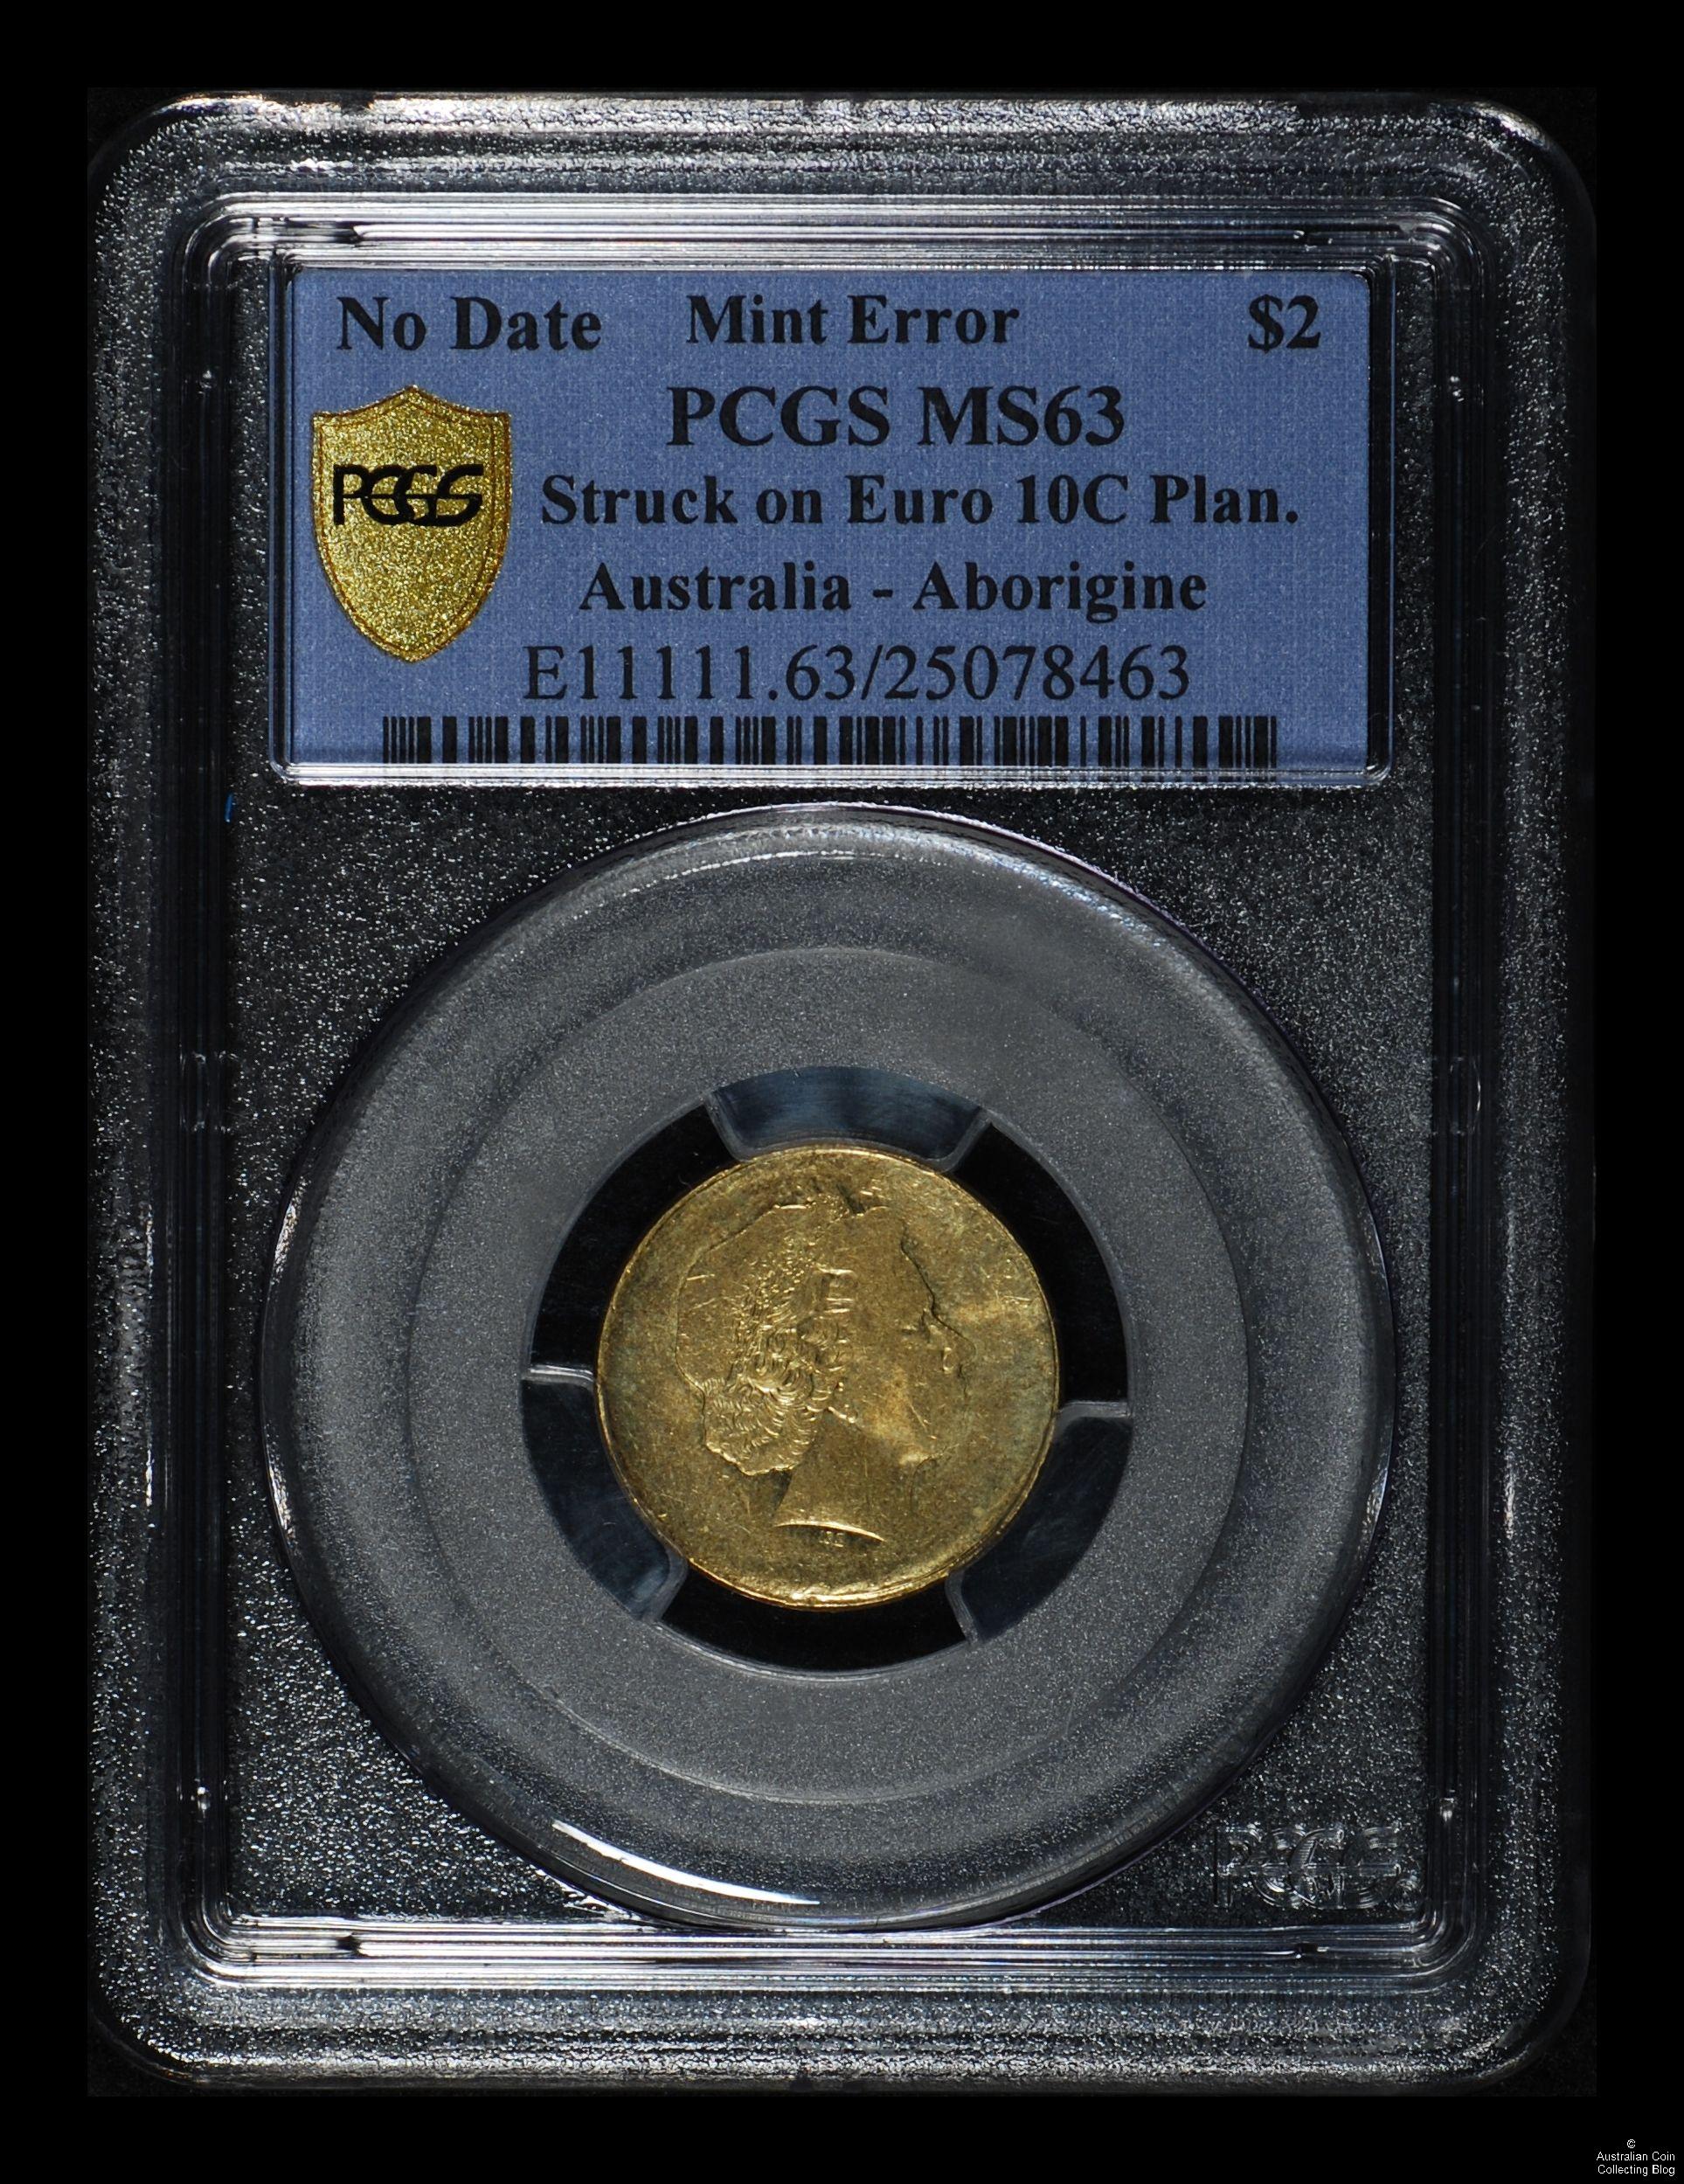 Australian $2 (no date) Struck on Euro 10c Planchet PCGS MS63